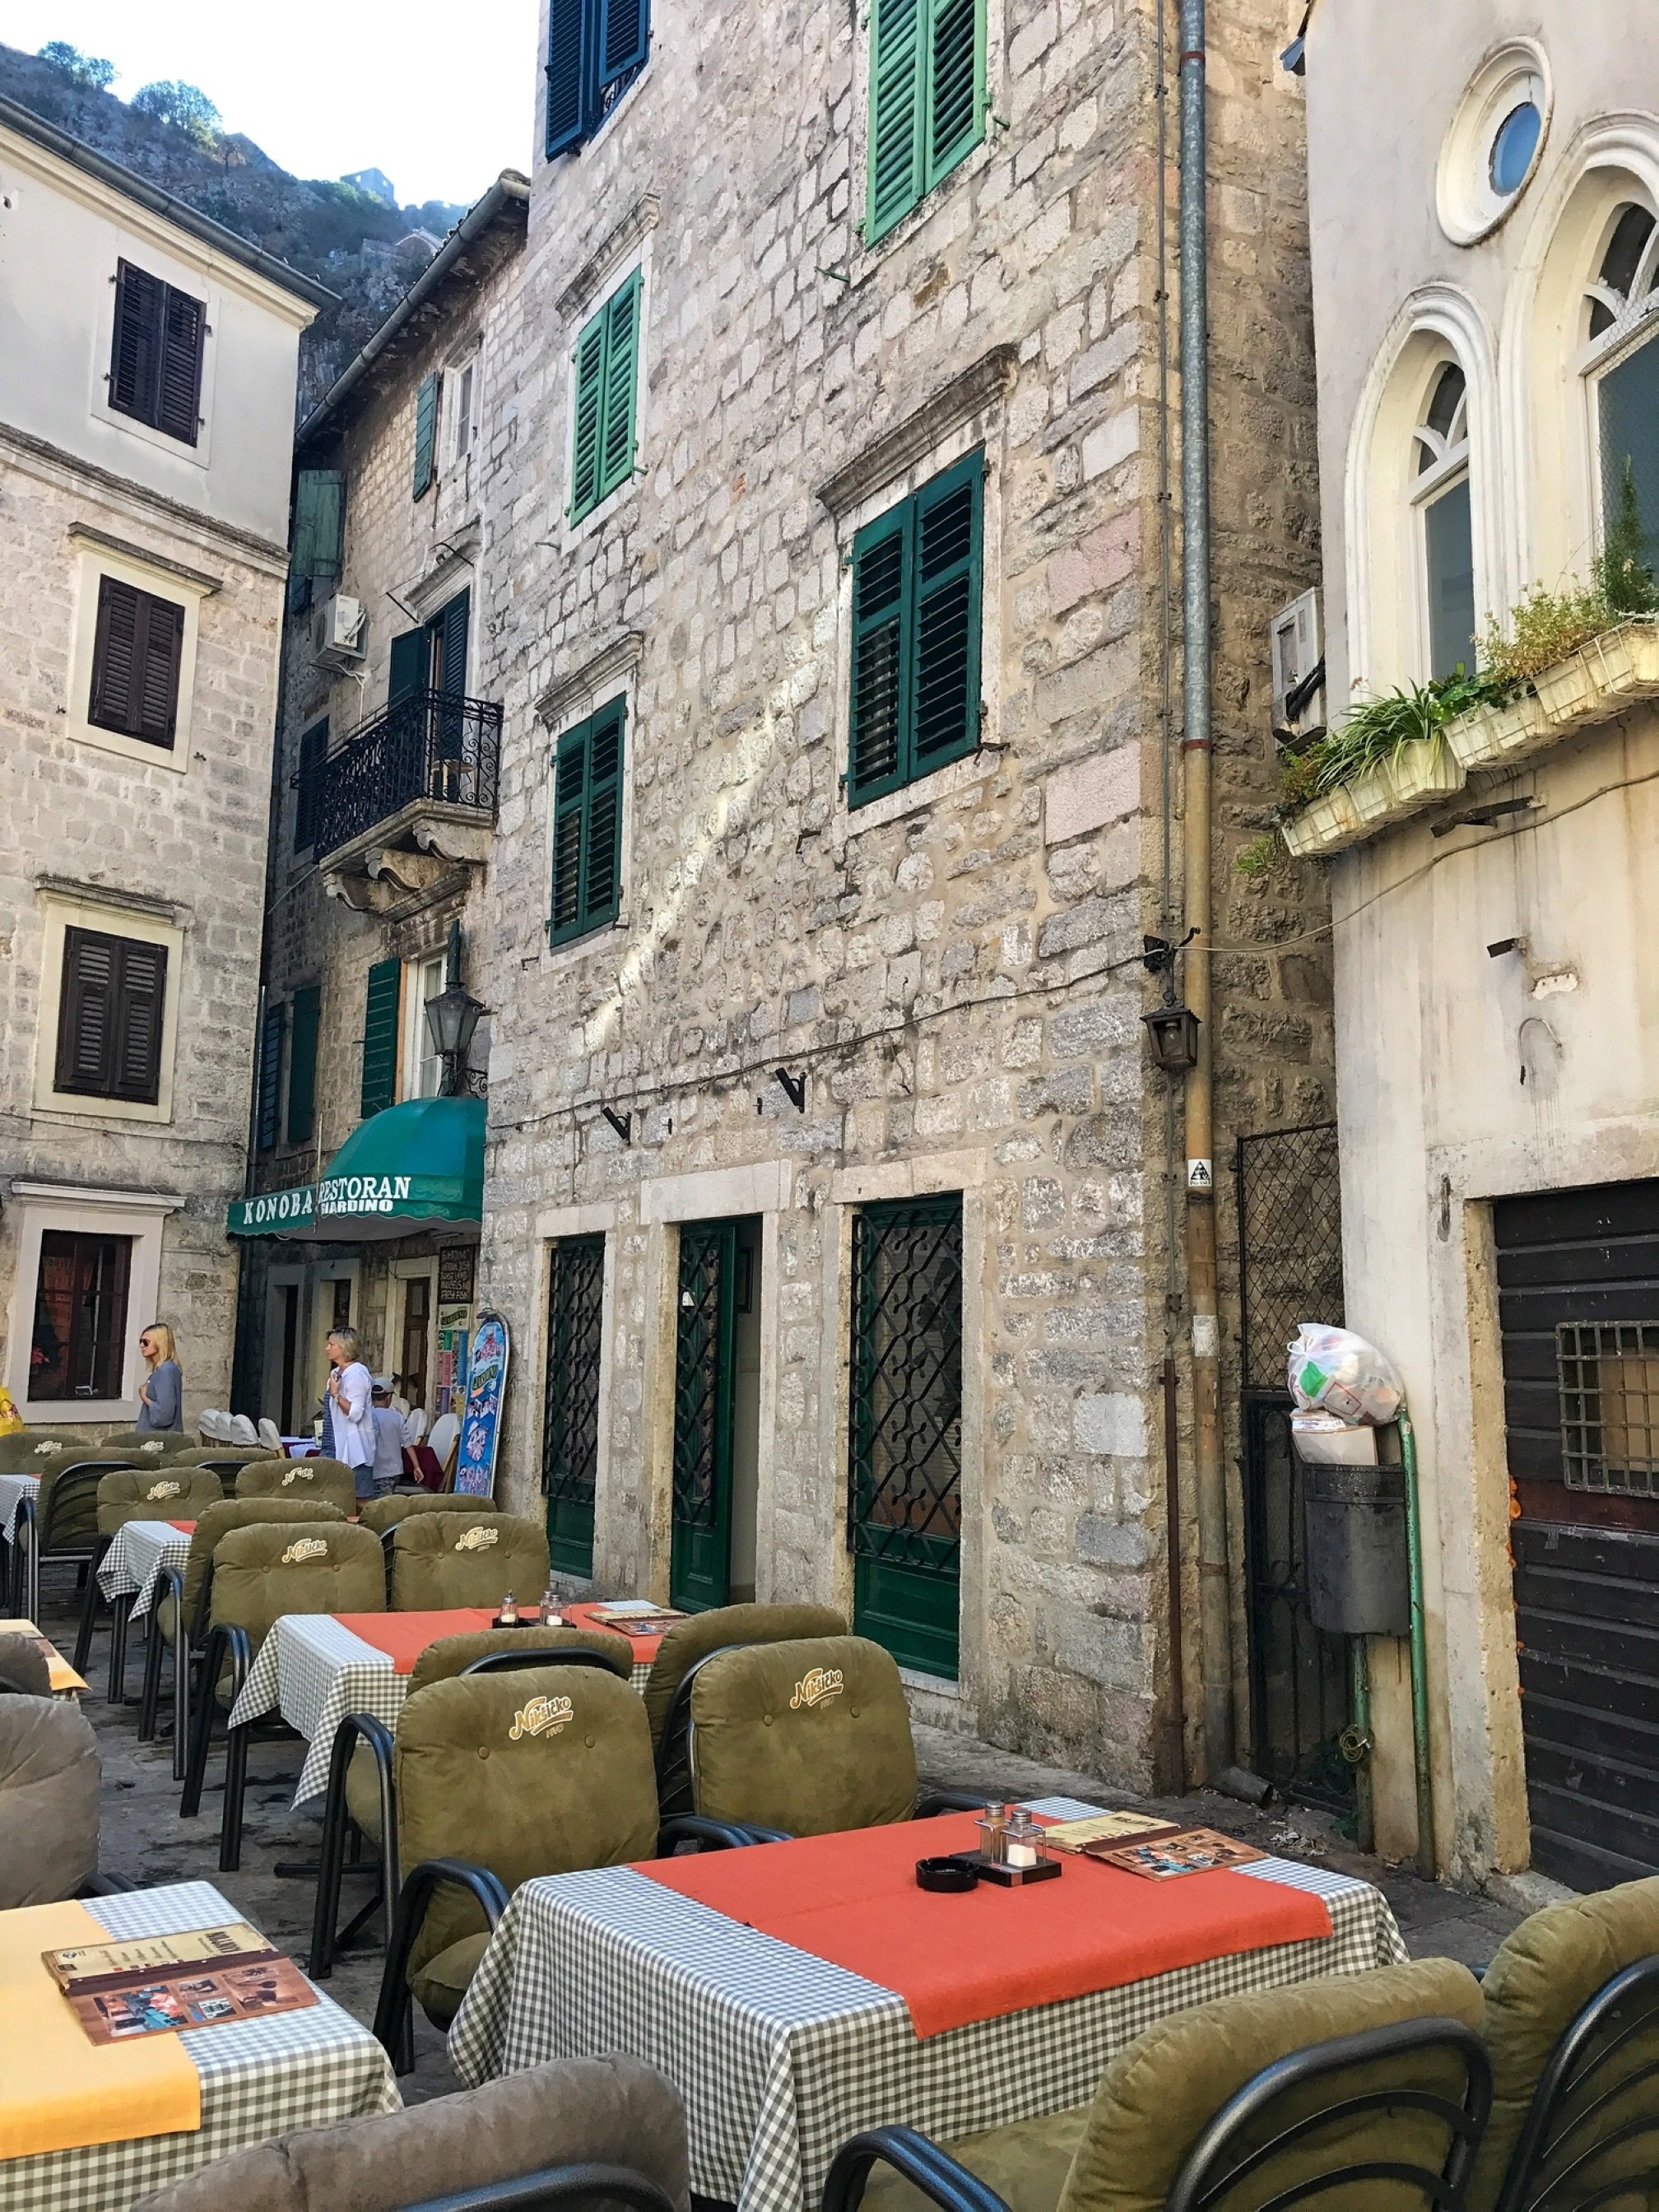 The old town of Kotor city, Montenegro.  (Photo by Özge Şengelen)